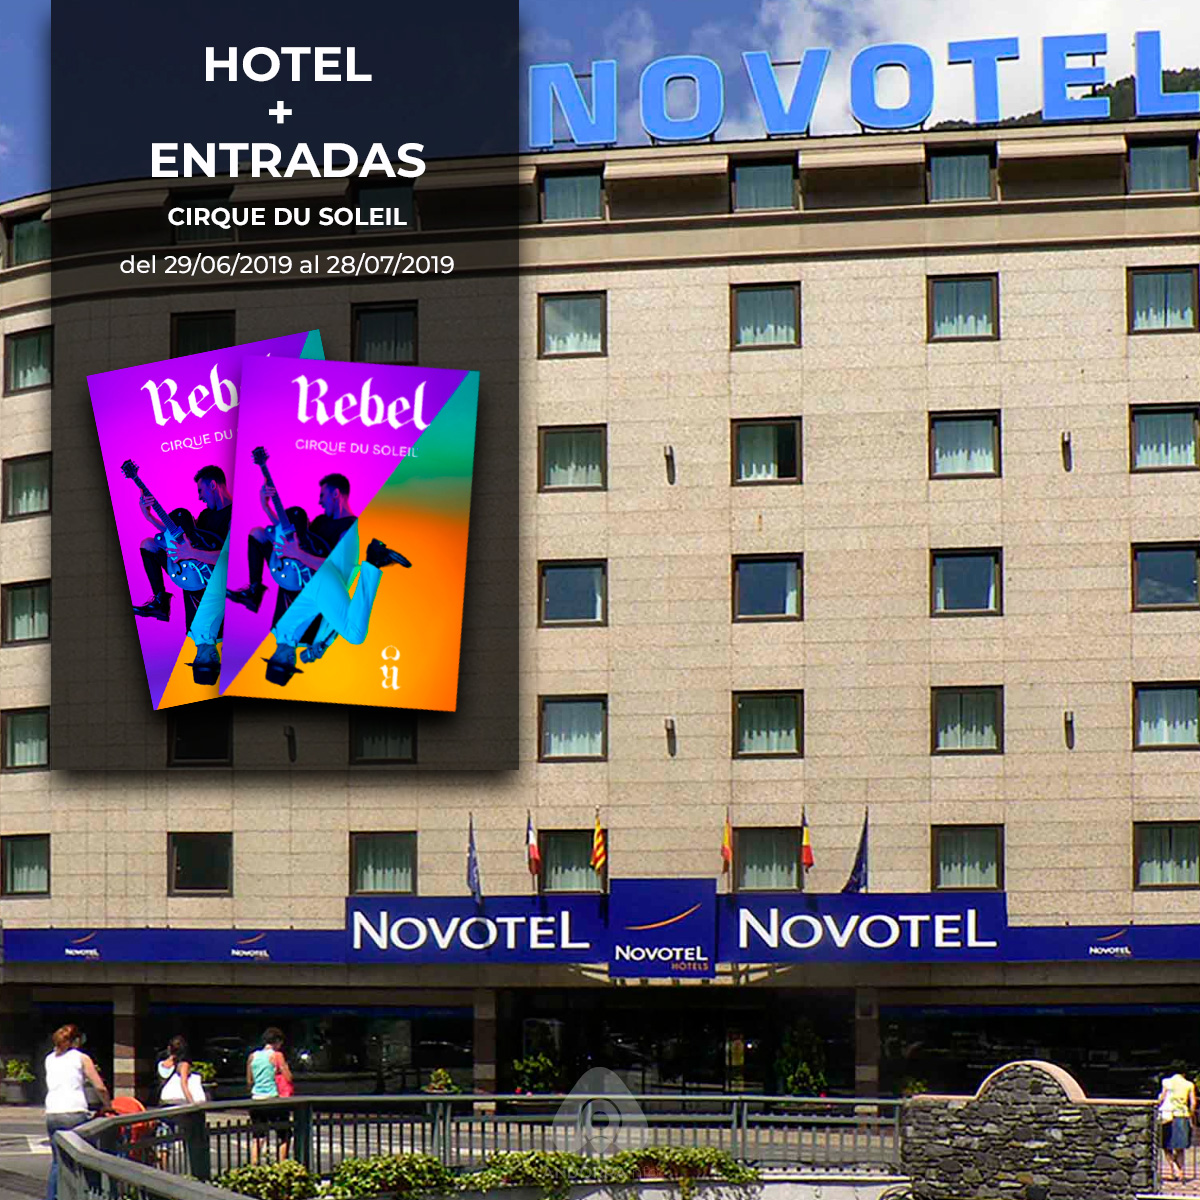 Especial Circo Del Sol Circo Del Sol + Hotel Novotel Prestige Hotels 4* (1N)